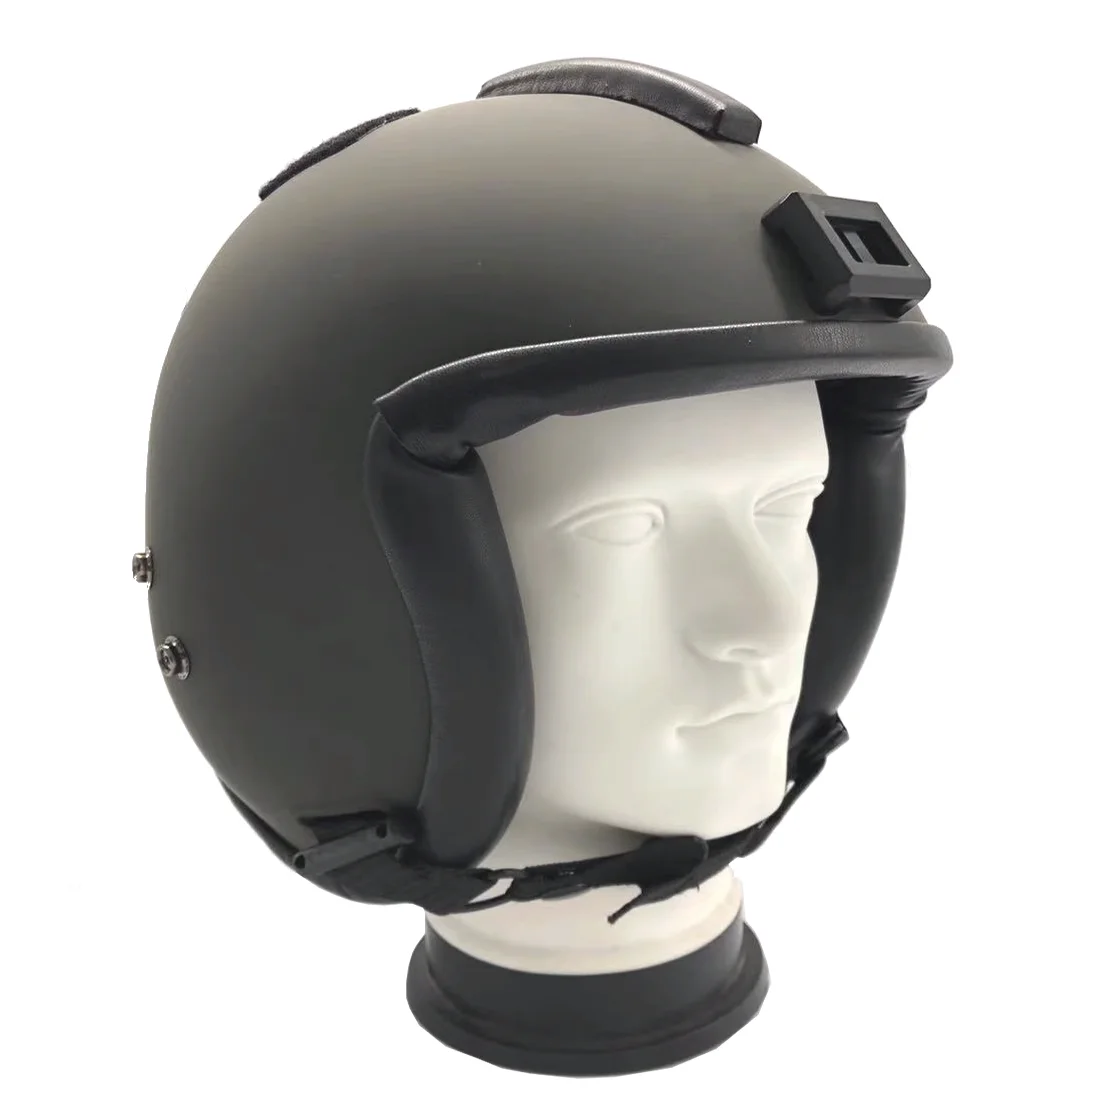 evi-studio-reproduced-hna-hgu-84p-aviation-helmet-defects-special-treatment